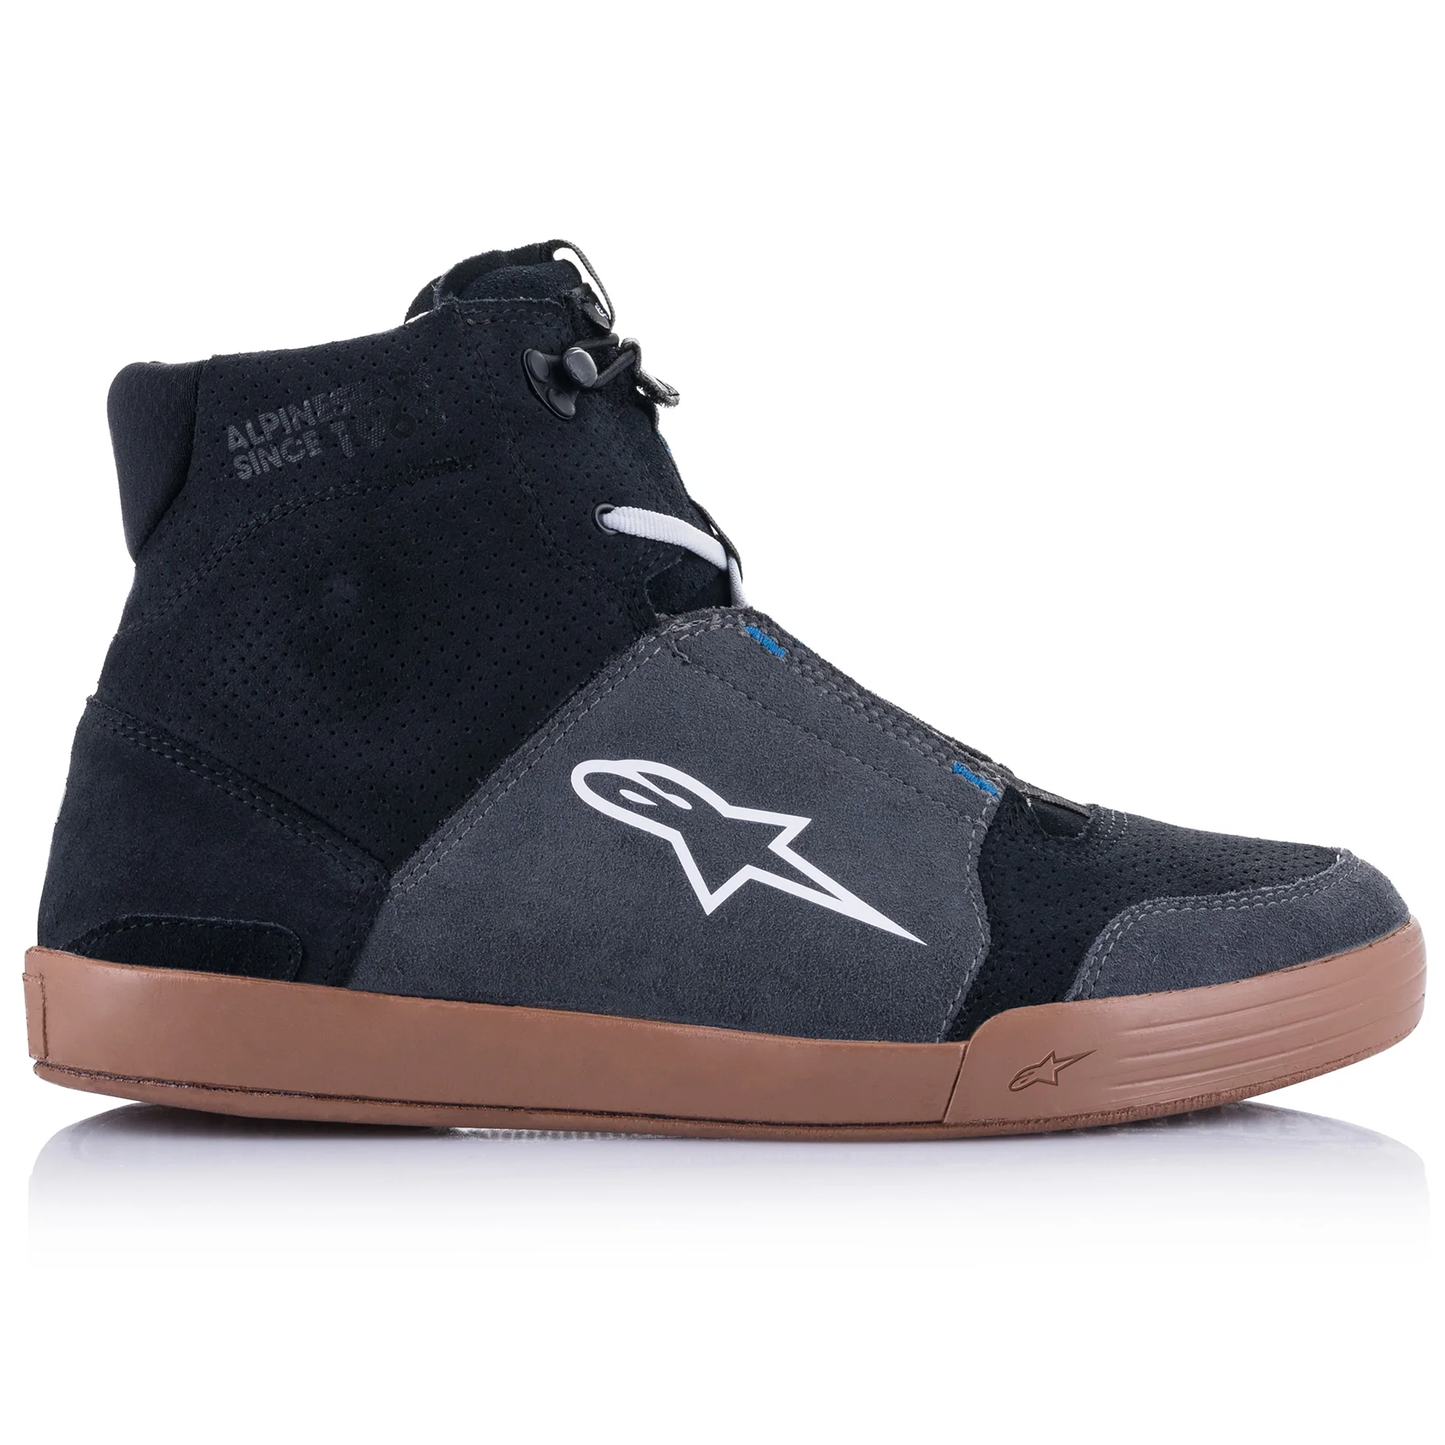 Alpinestars Chrome Shoes - Black/Asphalt/Gum/Blue